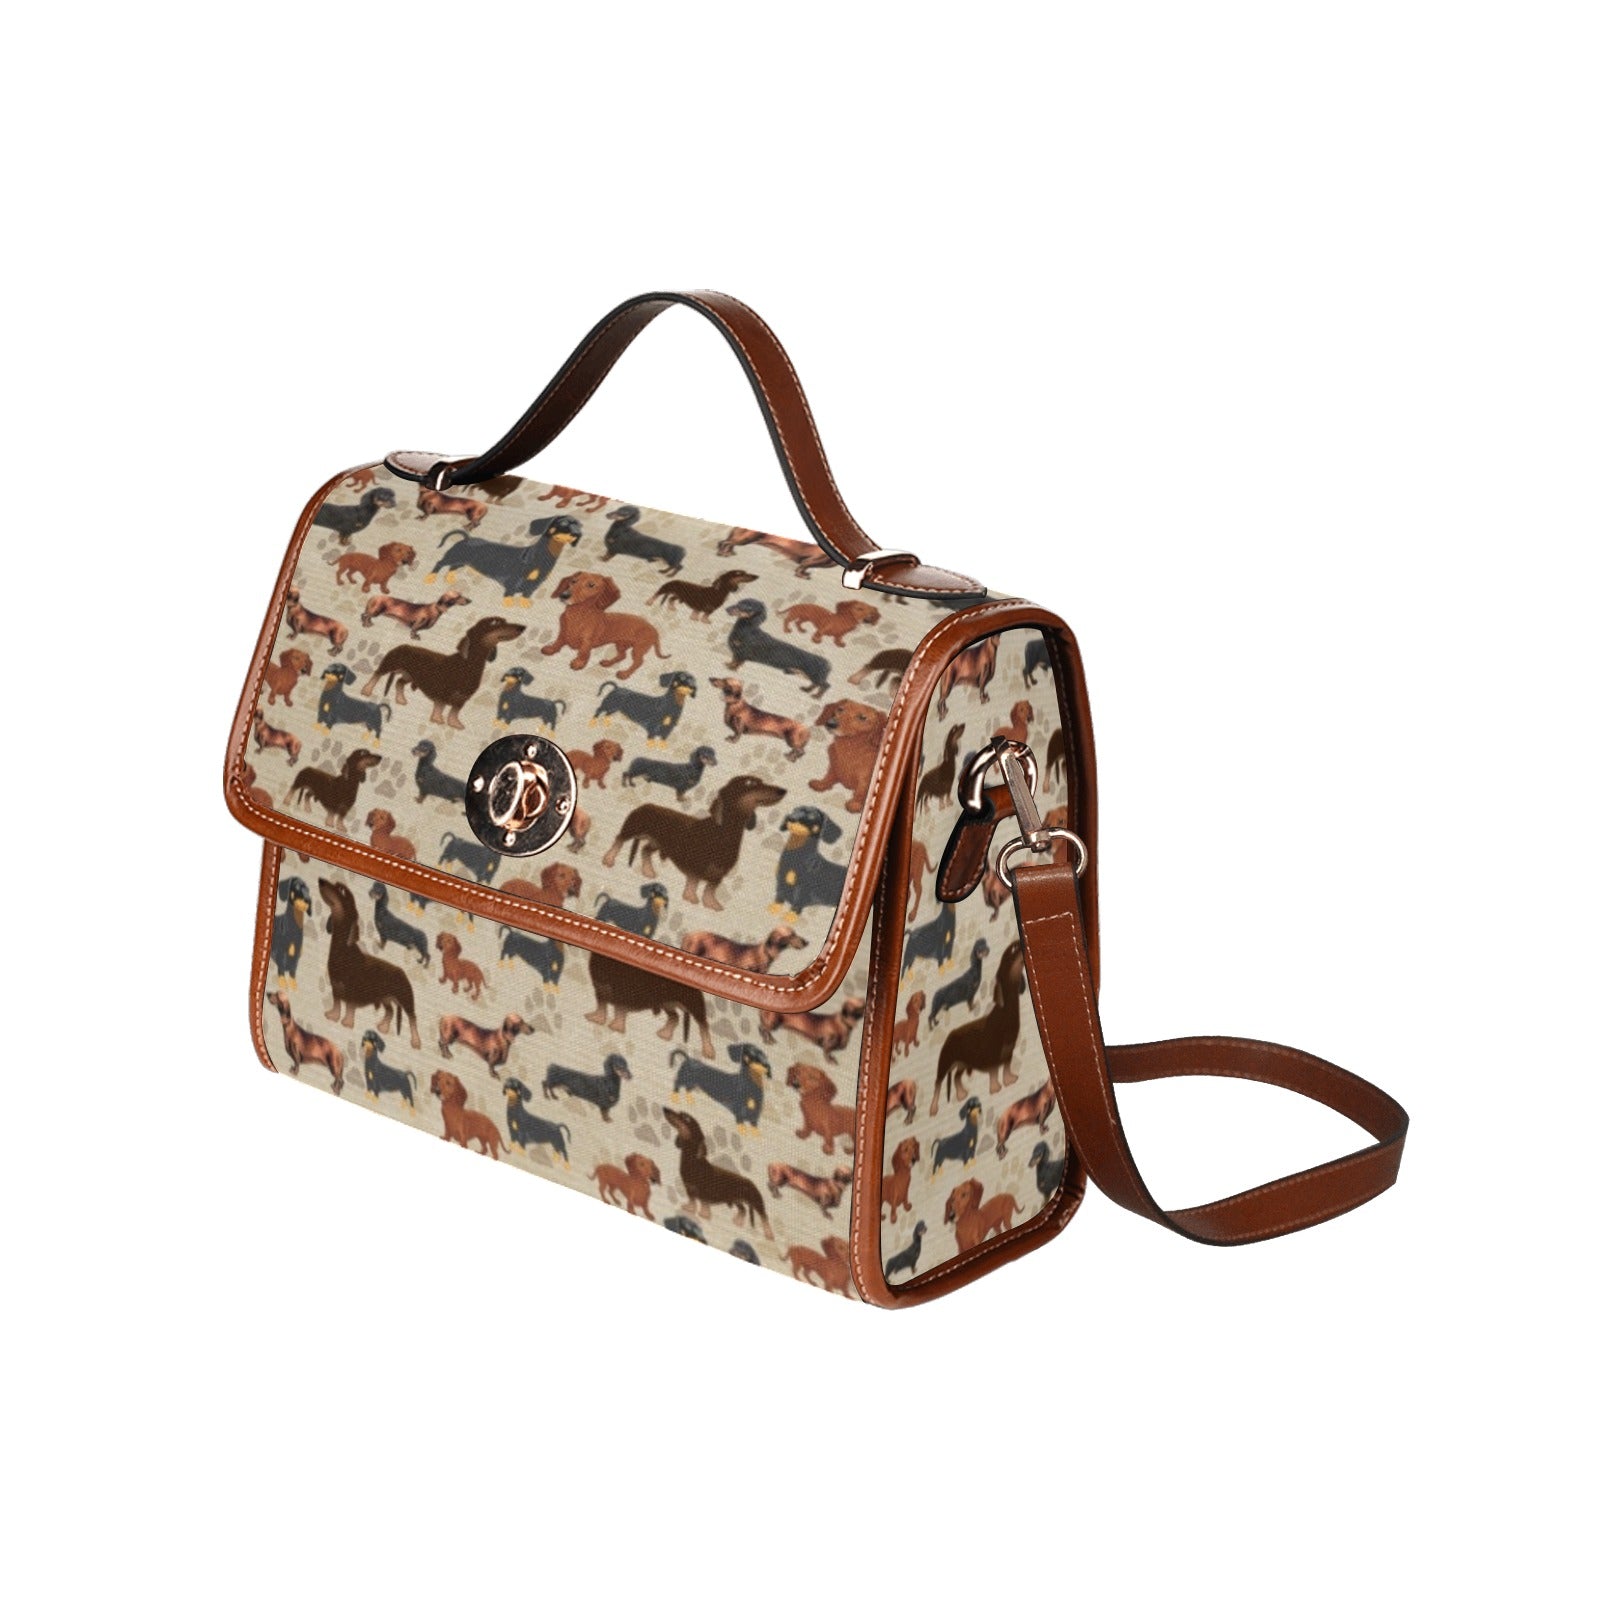 Dachshund - Waterproof Canvas Handbag